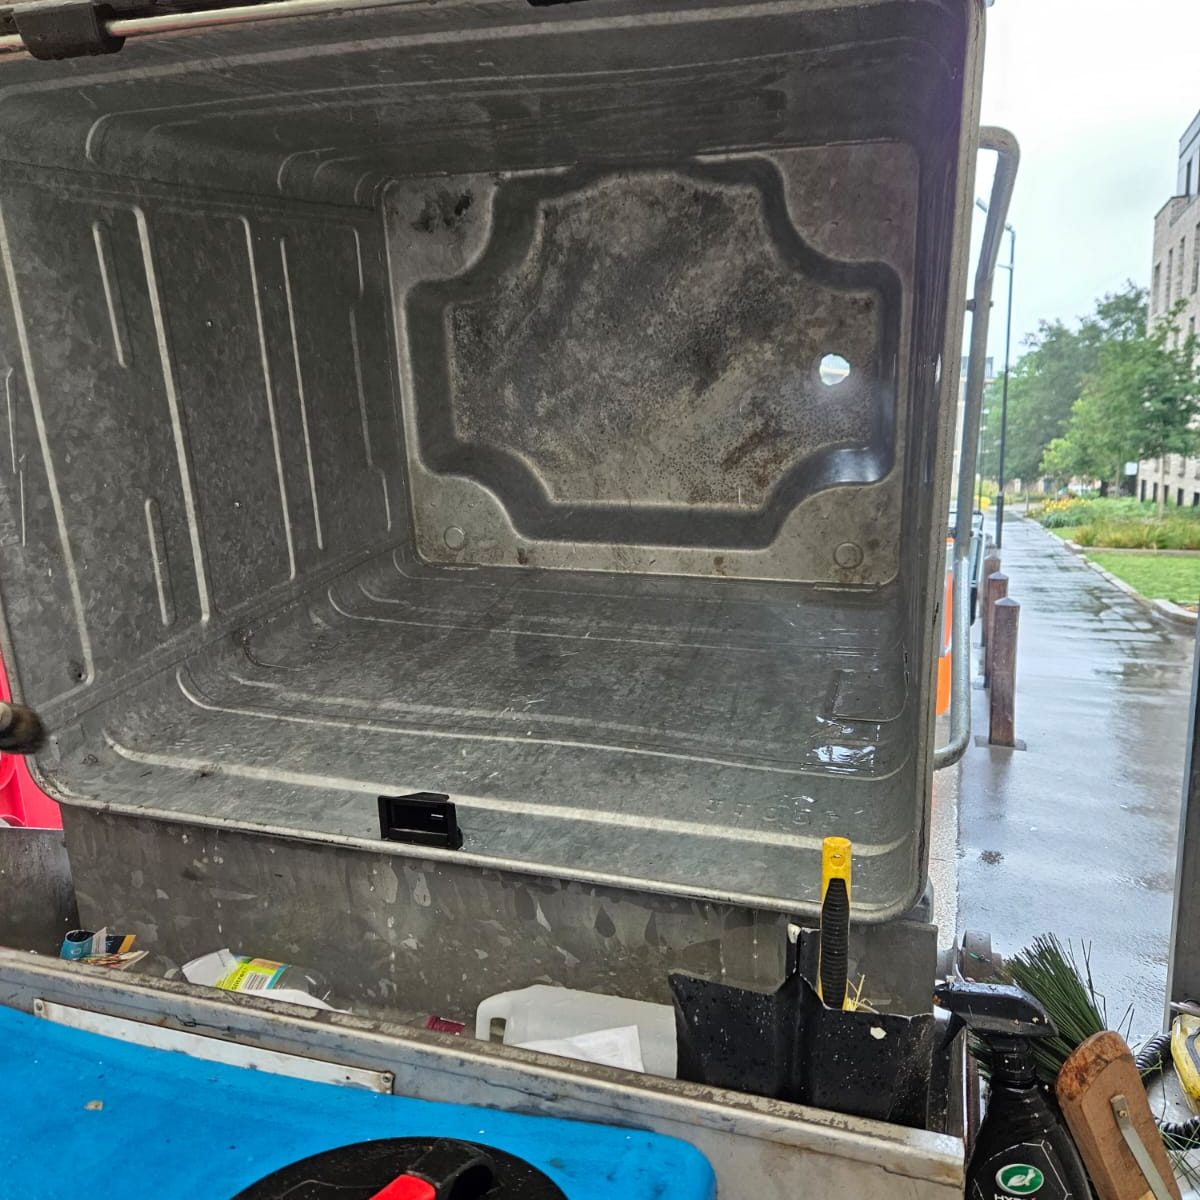 Commercial bin cleaning - inside van POV